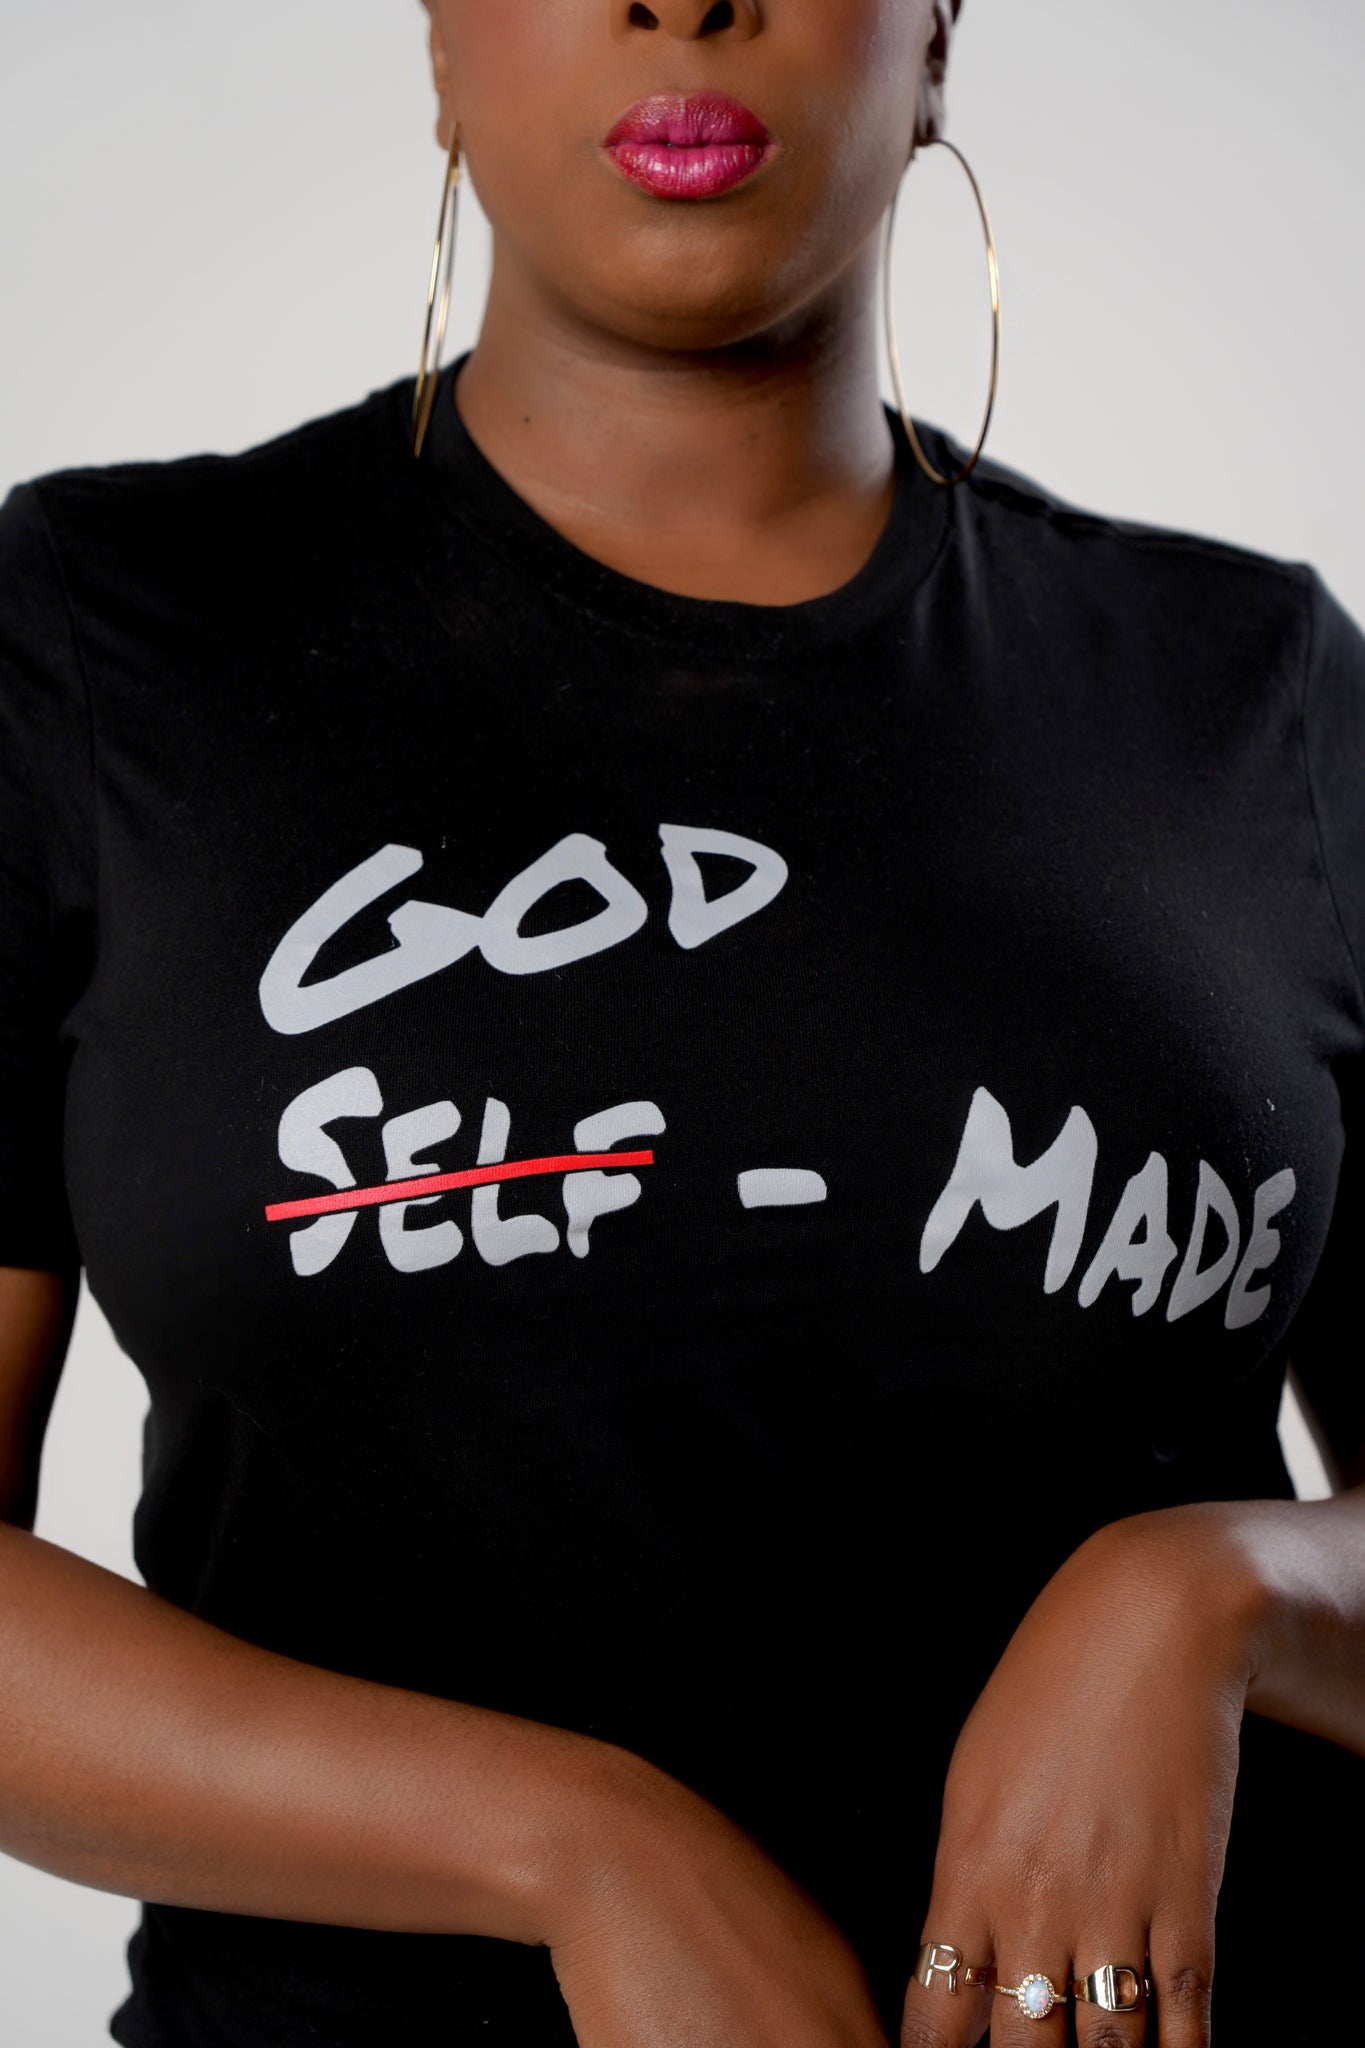 “God-Made” Tee